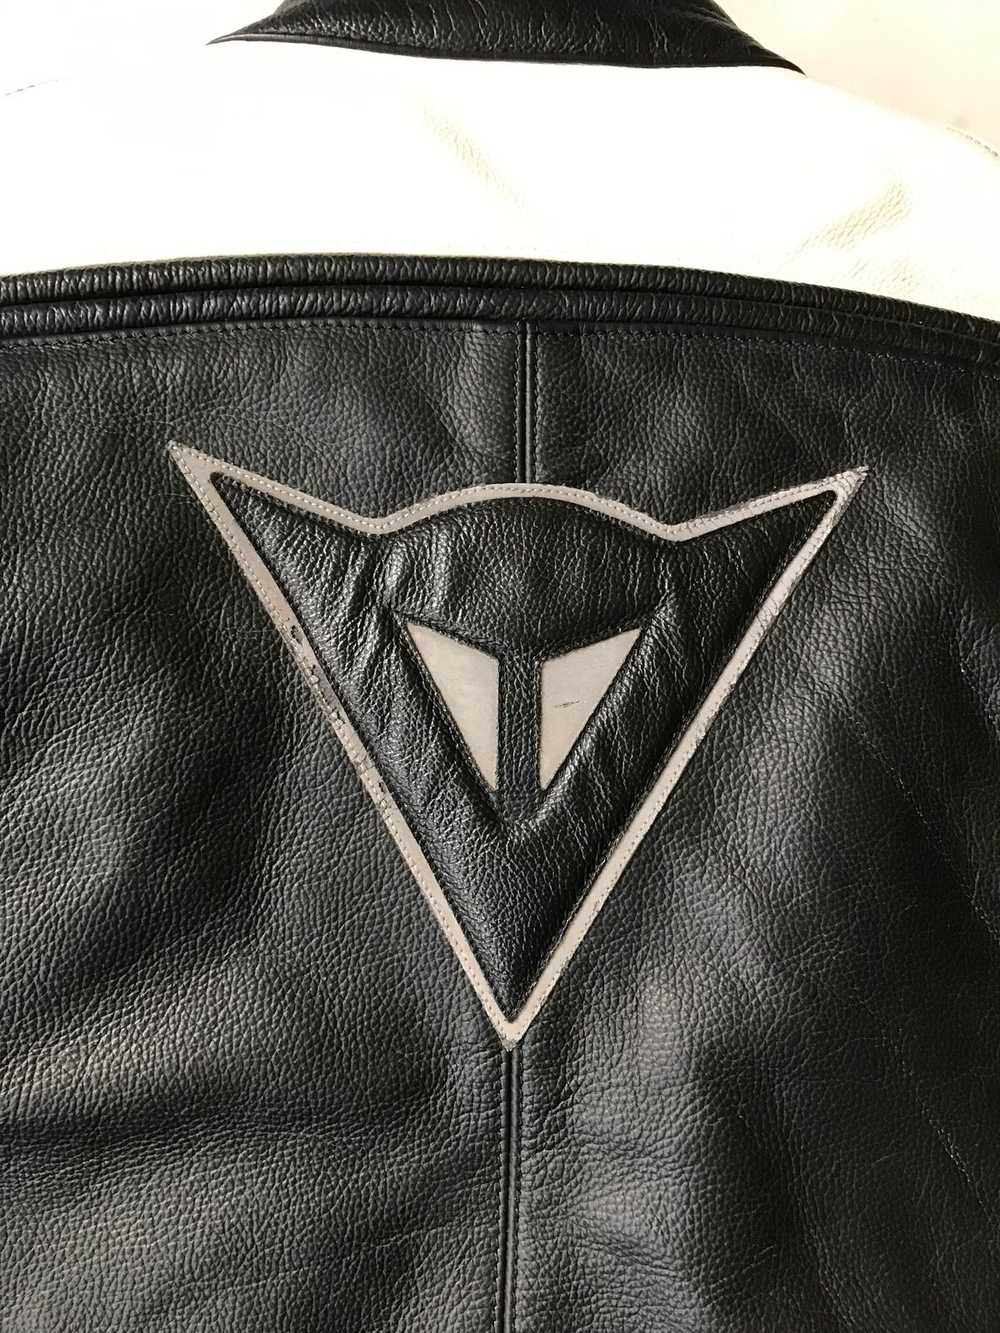 Dainese Dainese Two Tone Leather Motorcycle Jacket - image 7